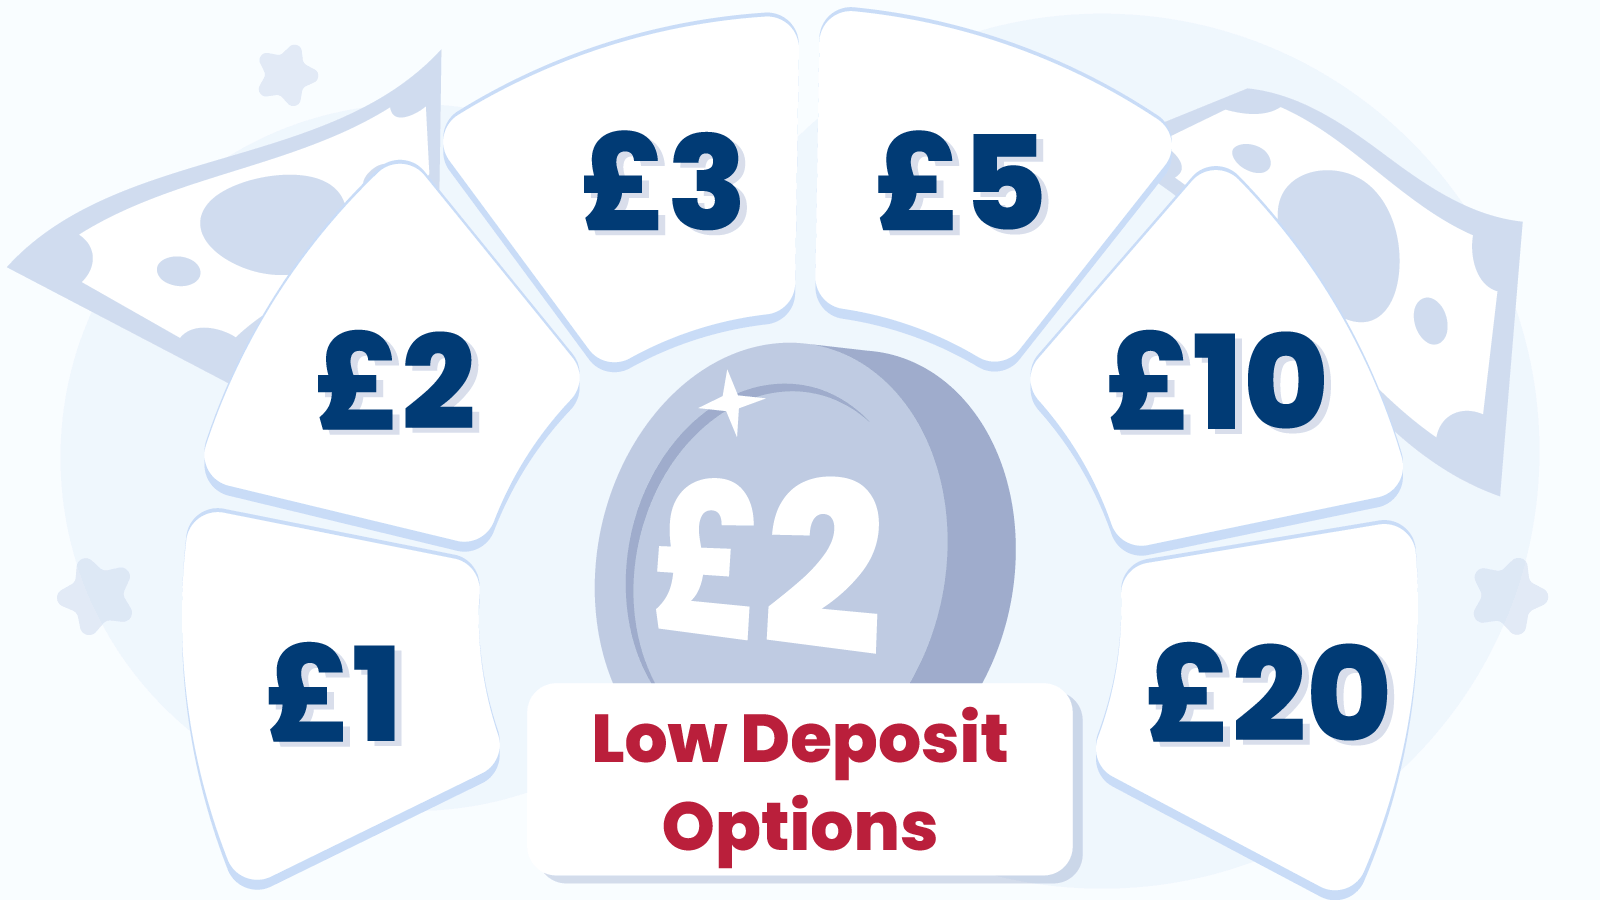 Comparing Bonuses £2 Deposit vs Other Low Deposit Options